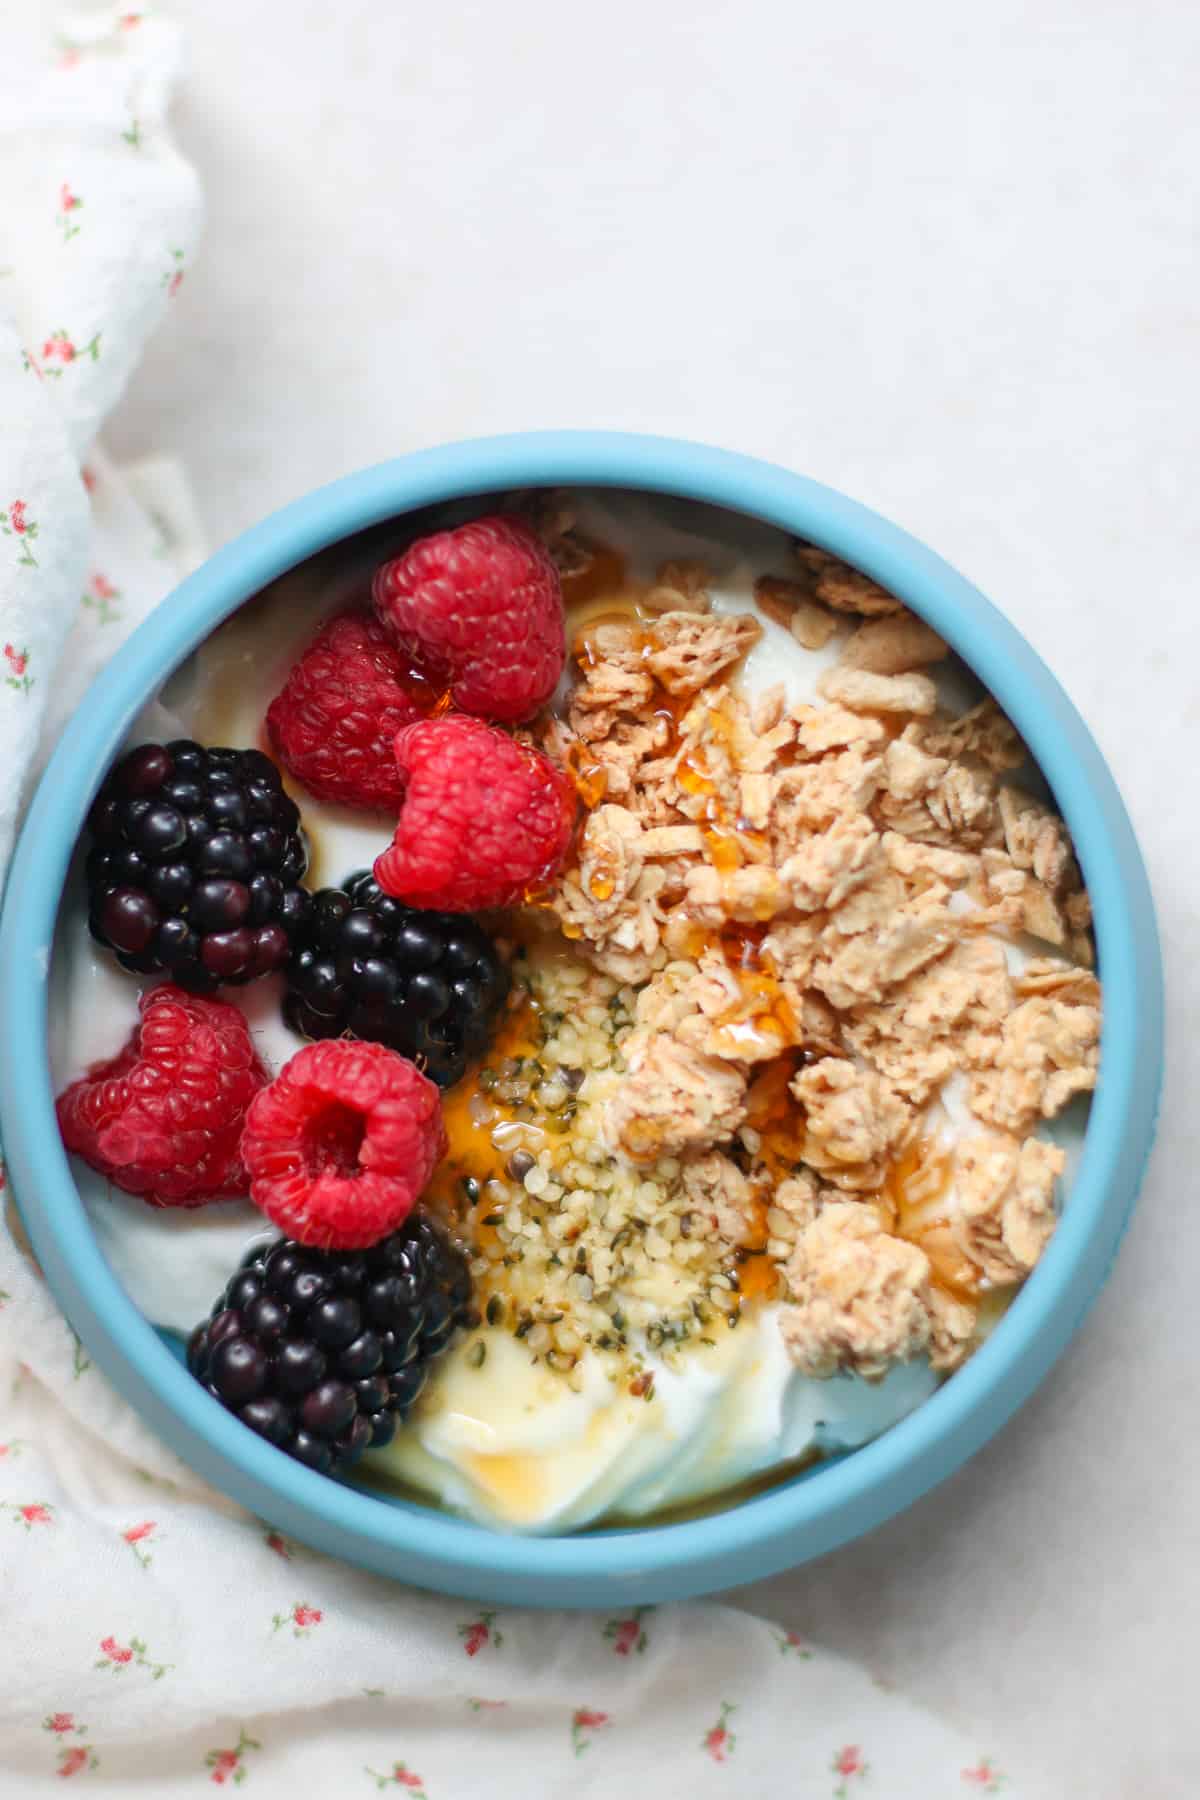 yogurt granola bowl with berries and chia seeds.